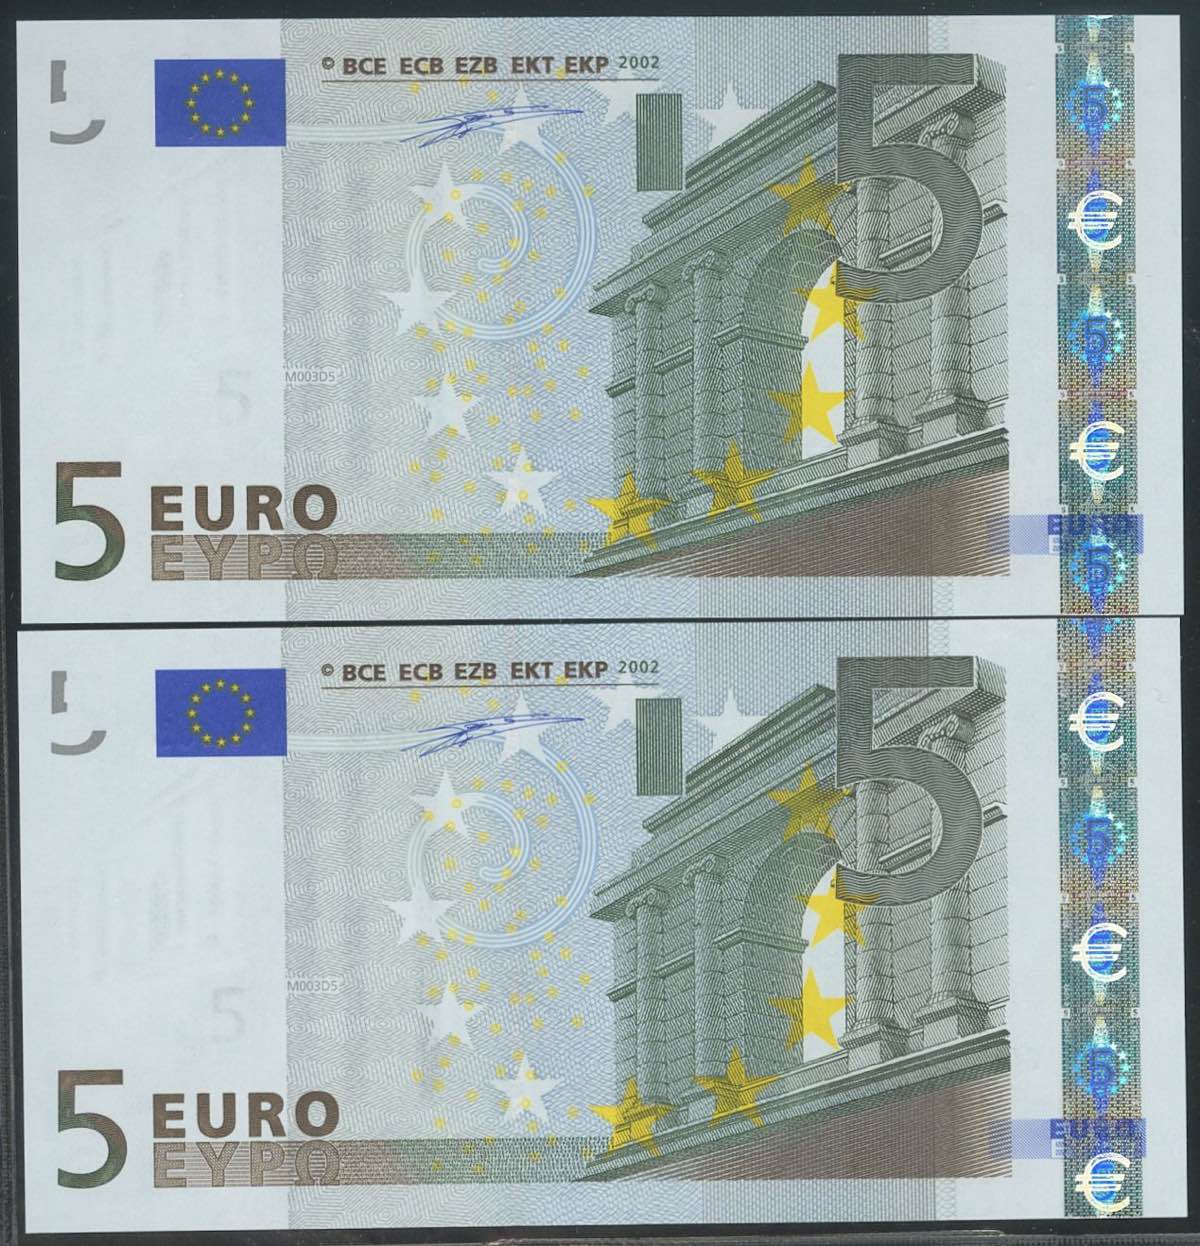 Billetes Euros - Ibercoin - Subastas Numismáticas